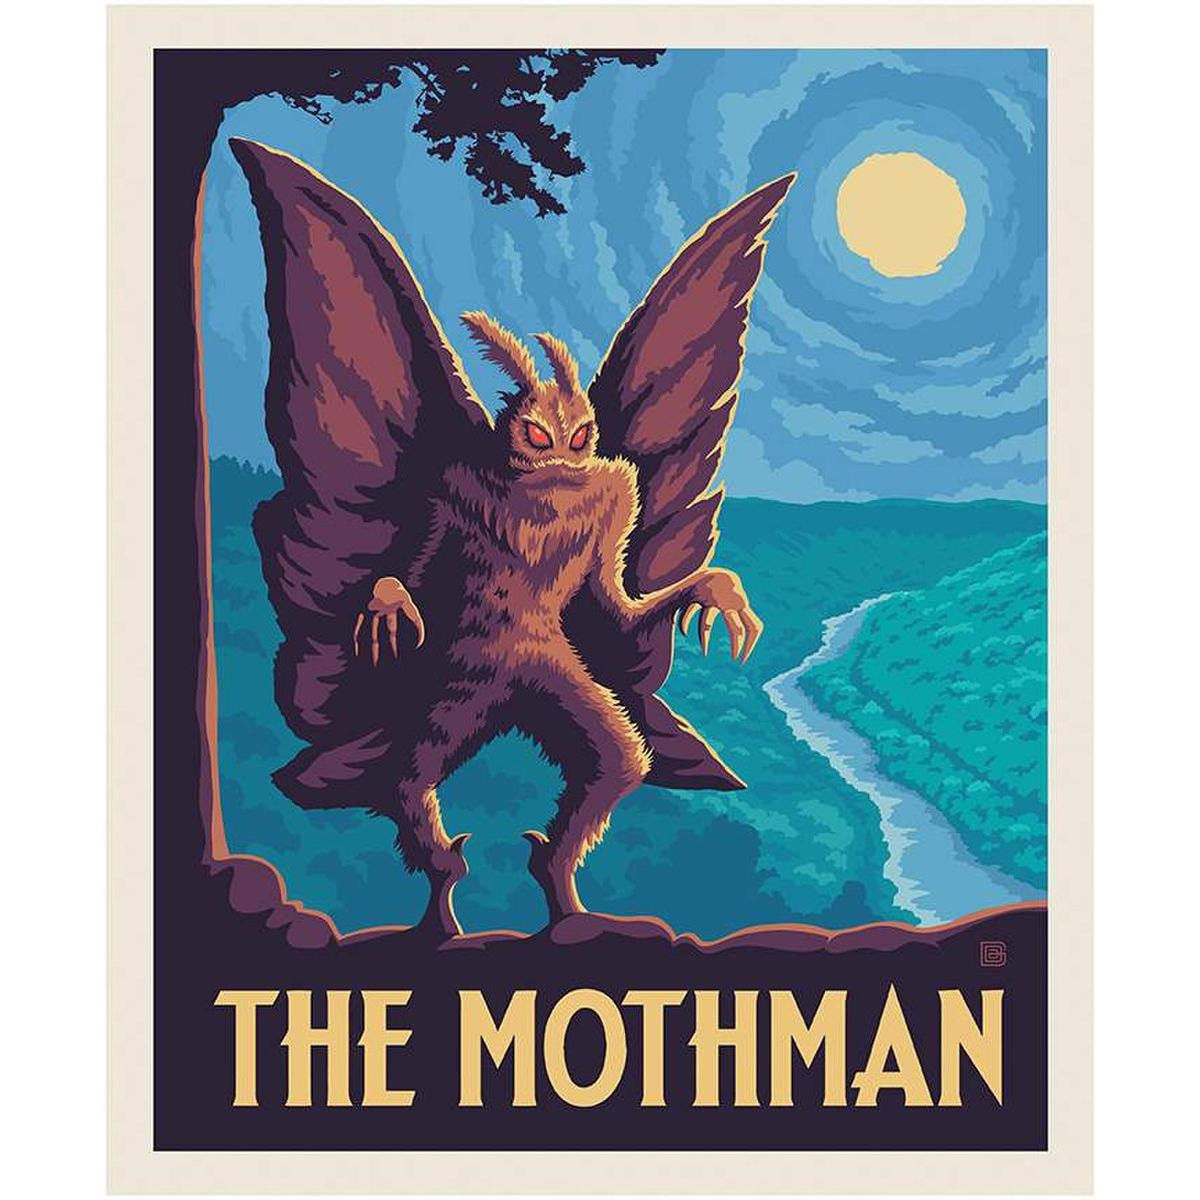 Legends of the National Parks Poster Panel - Mothman